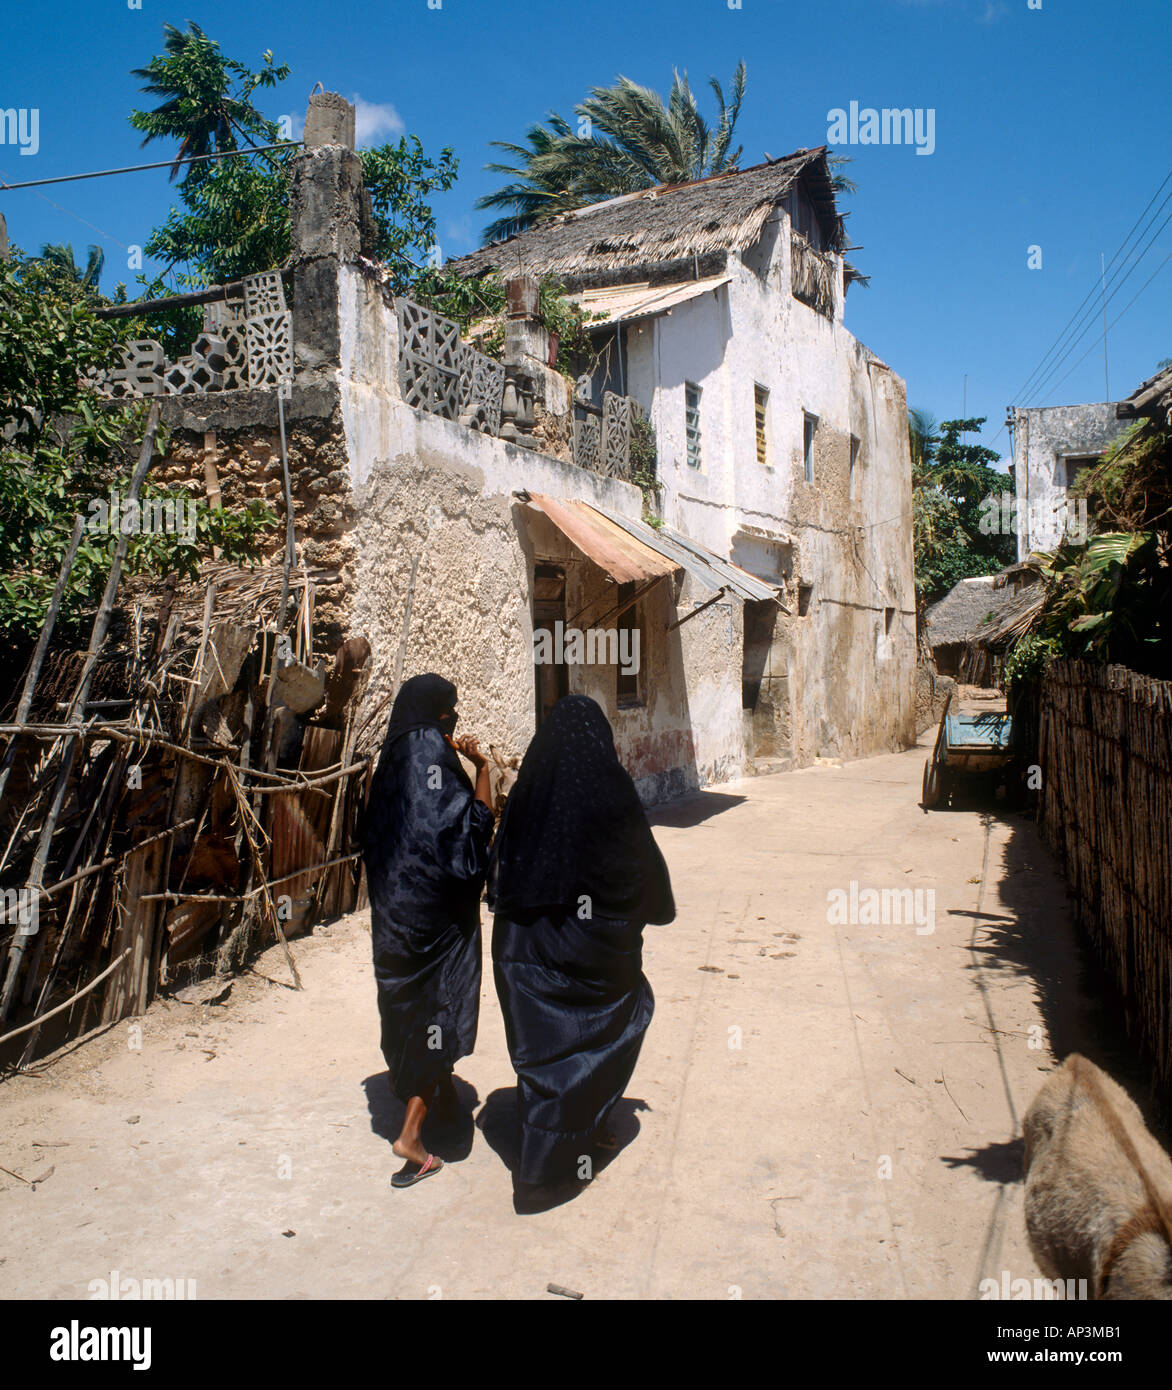 Donne arabe in abito tradizionale nella città di Lamu, isola di Lamu, costa Nord, Kenya, Africa orientale Foto Stock